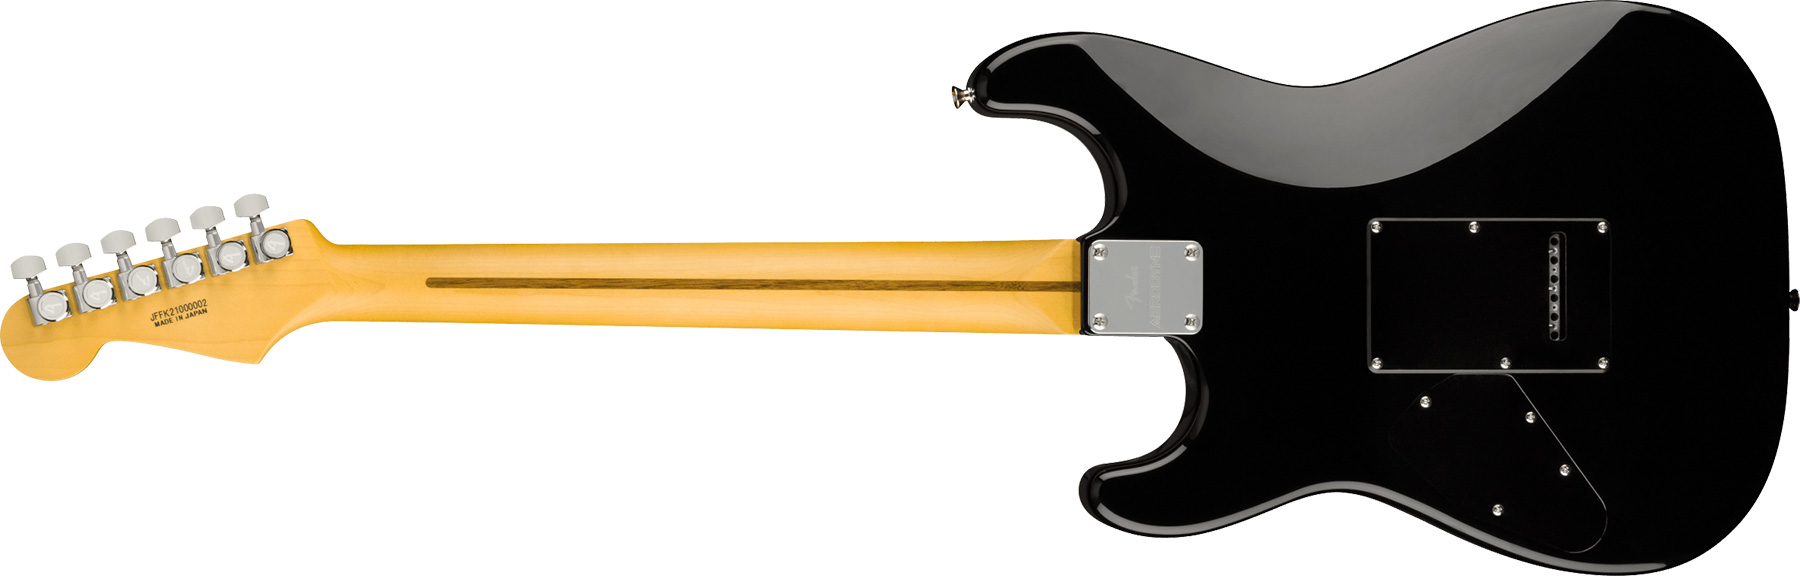 Fender Strat Aerodyne Special Jap Trem Hss Mn - Hot Rod Burst - Str shape electric guitar - Variation 1